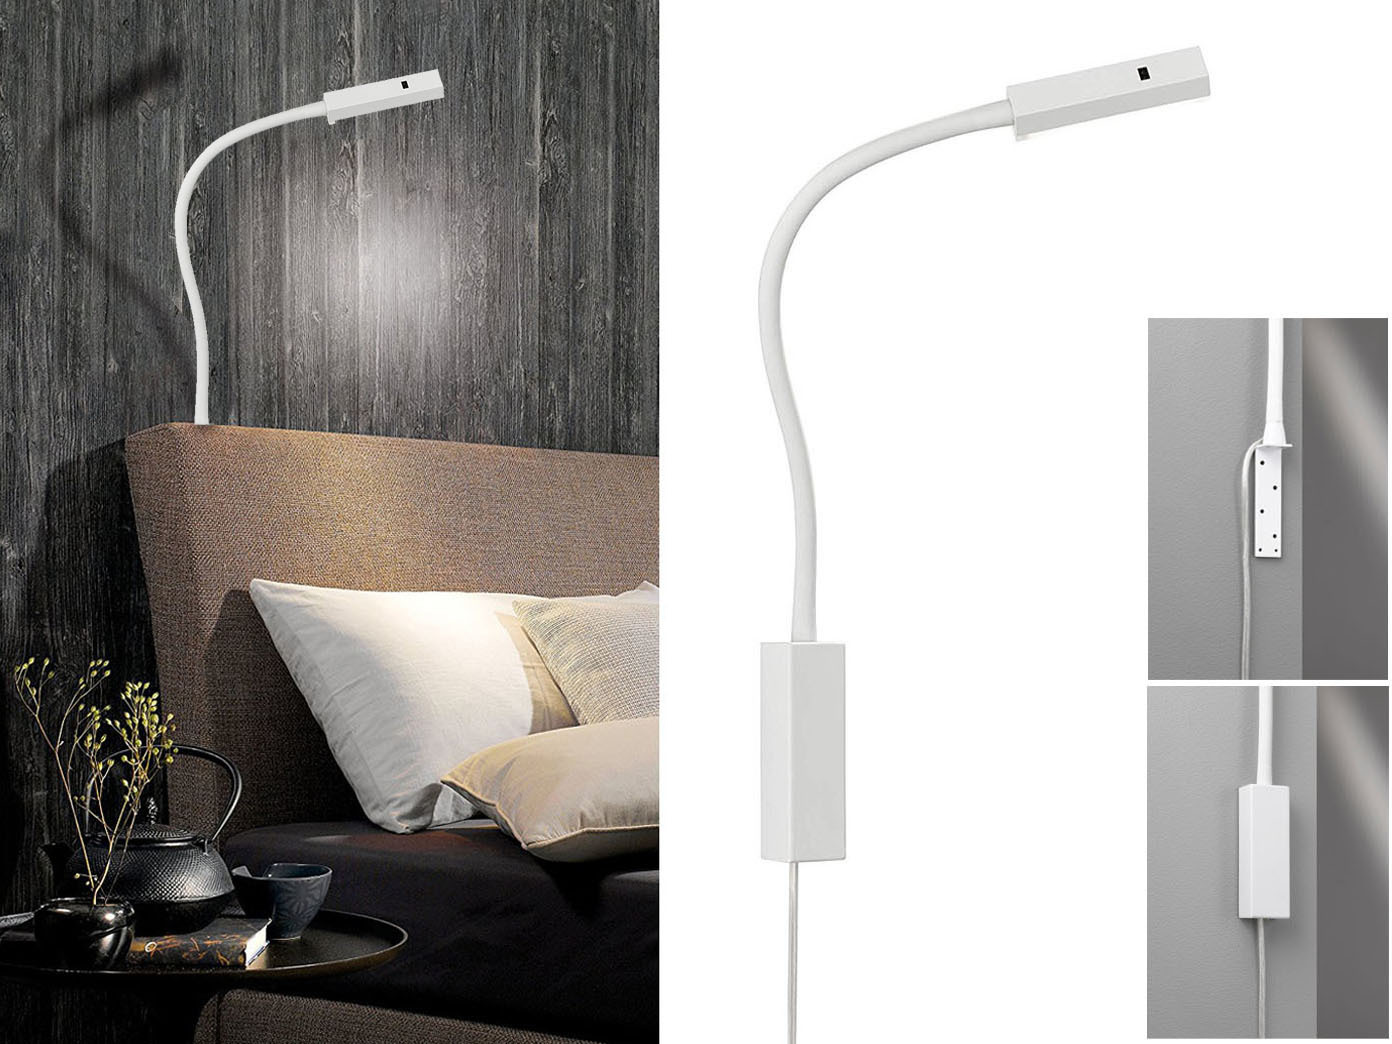 LED Leselampe Weiß dimmbar - Bett Lampe Leuchte fürs Kopfteil Couch